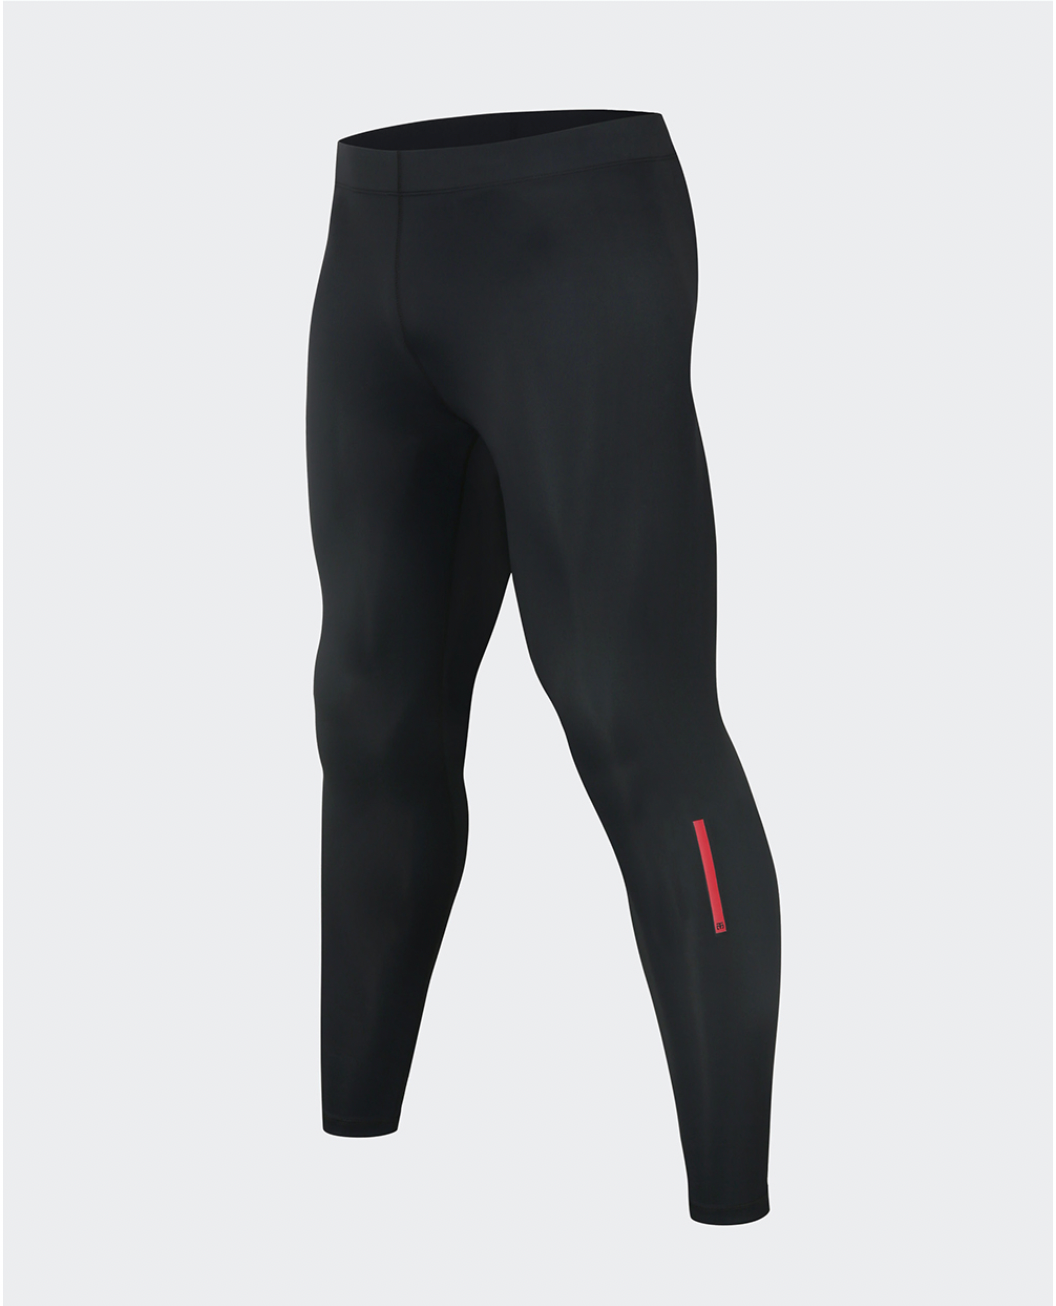 Muscle Guard Long Pants (Black)